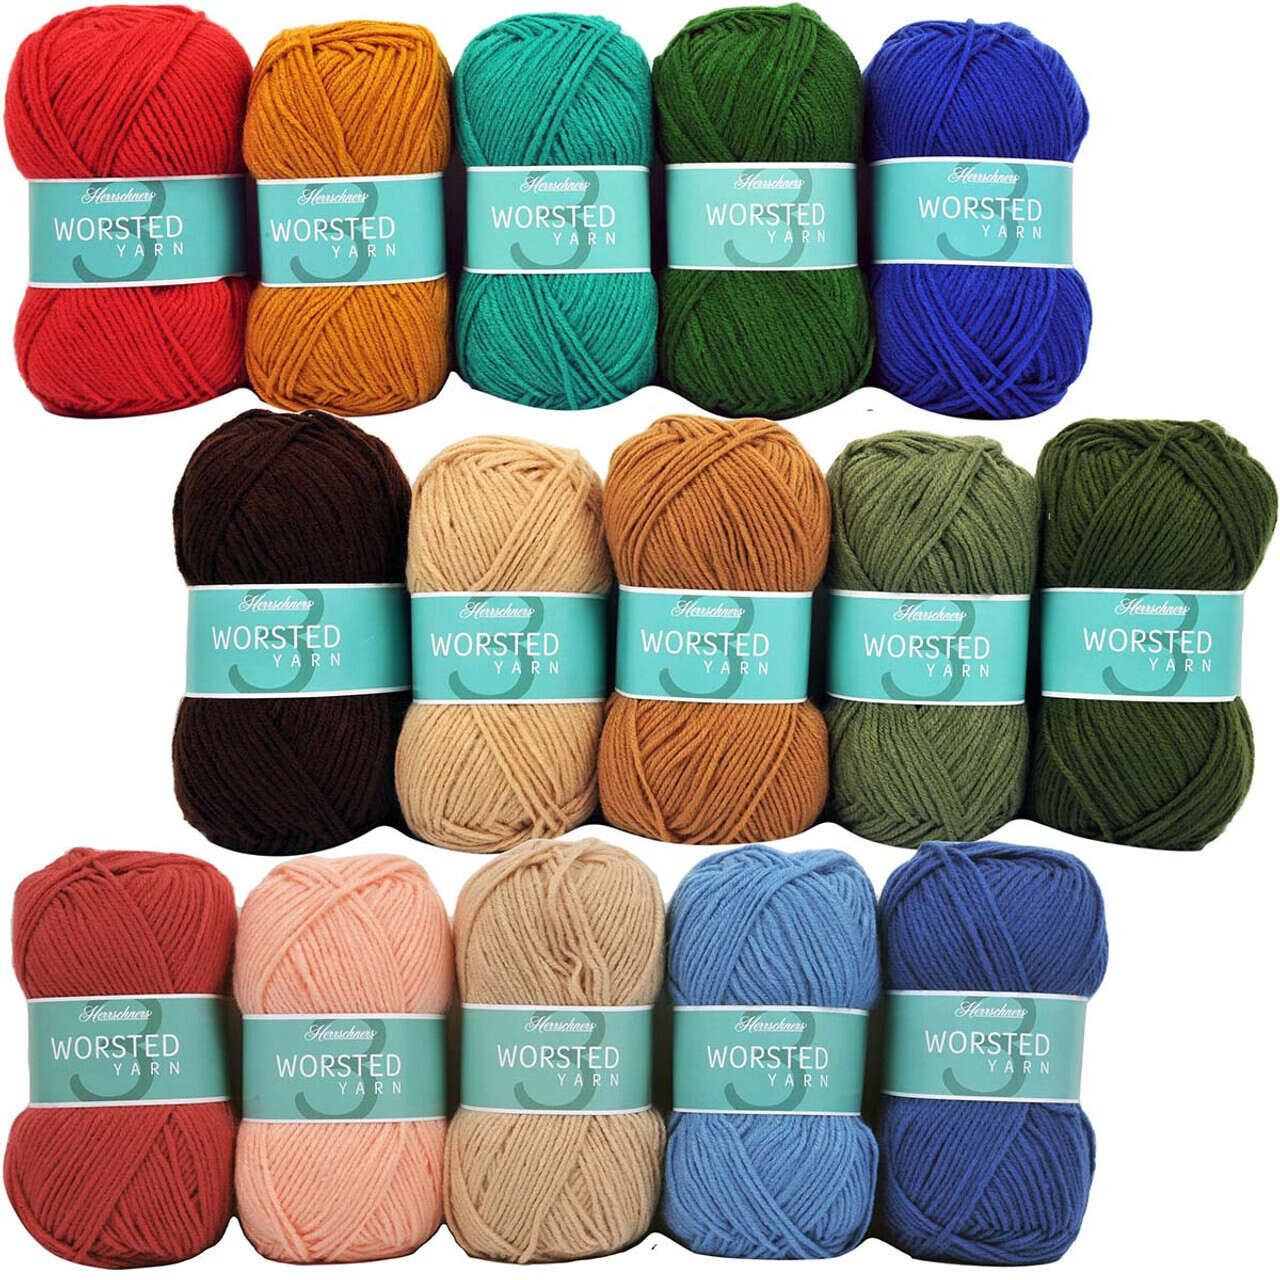 Amigurumi Kit - The Yarn Patch